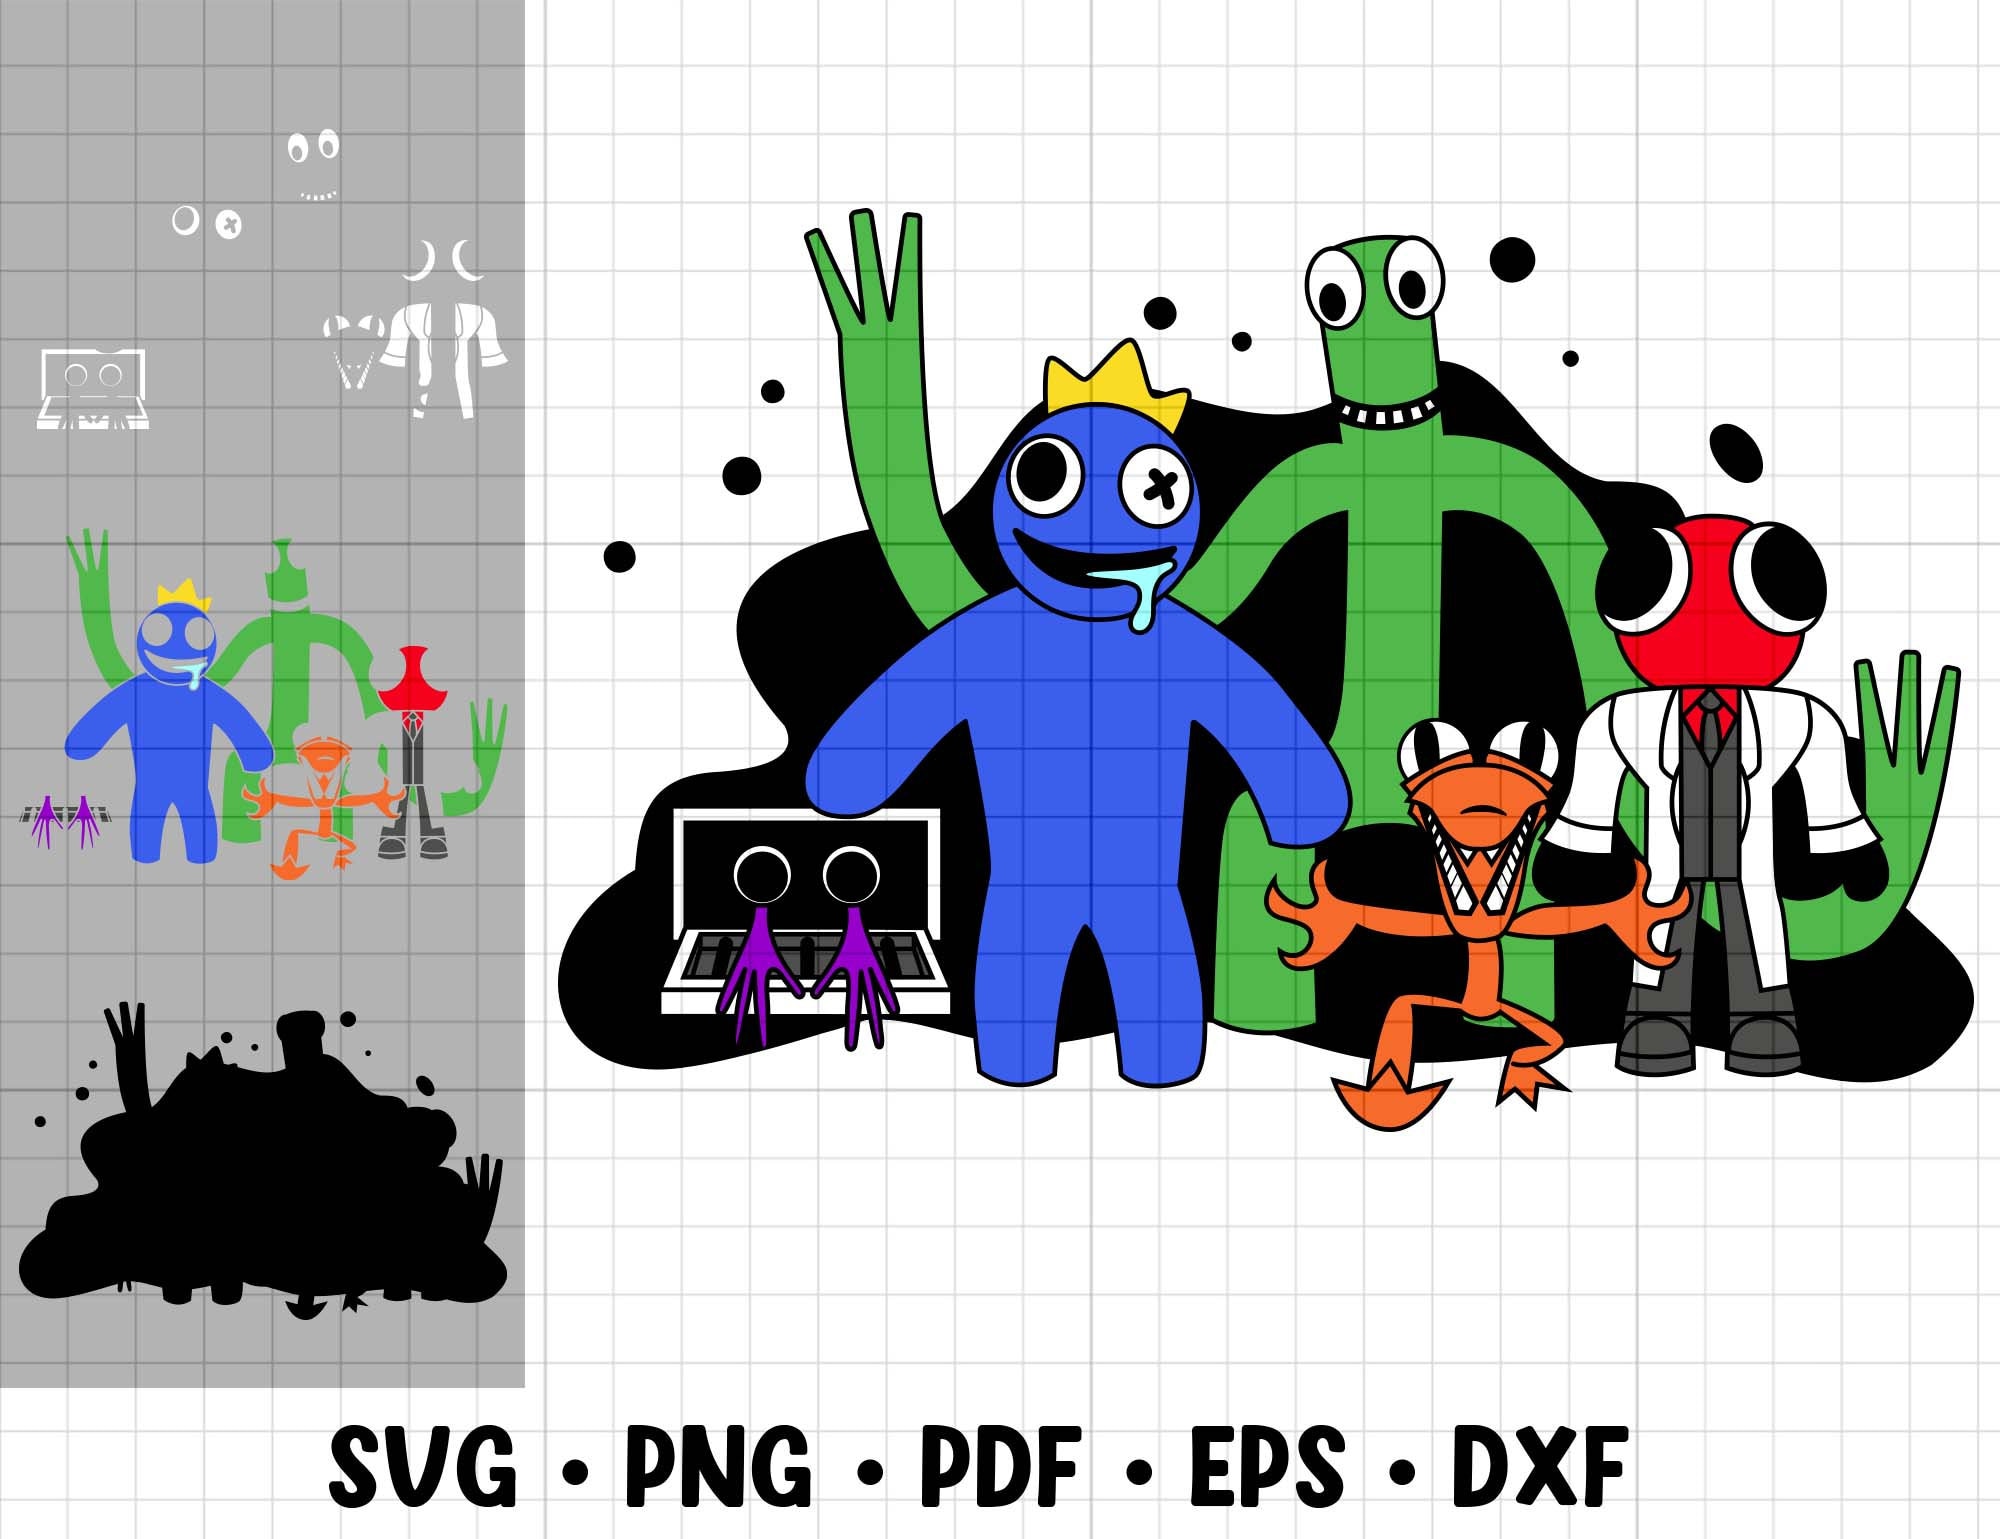 Rainbow Friends SVG, Rainbow Friends Roblox All Characters, Rainbow Friends  PNG, Rainbow Friends Cut, Roblox SVG